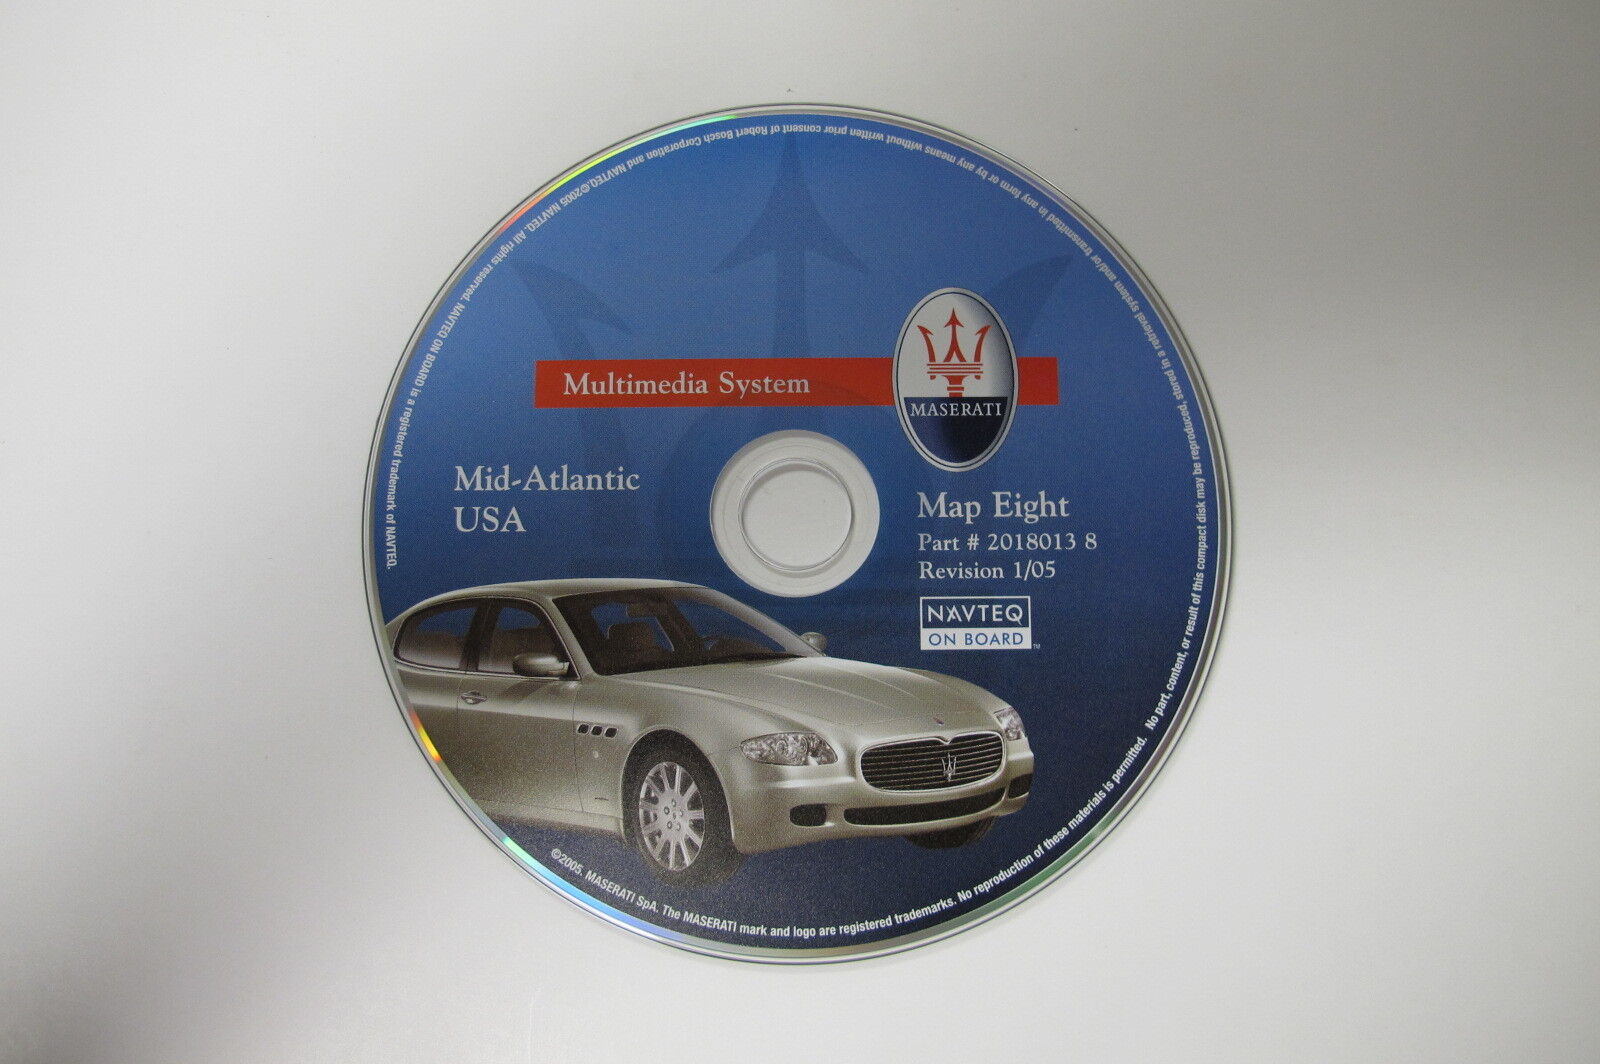 Maserati 2005 Navigation GPS CD NAVTEQ 20180138 Map #8 Mid-Atlantic USA